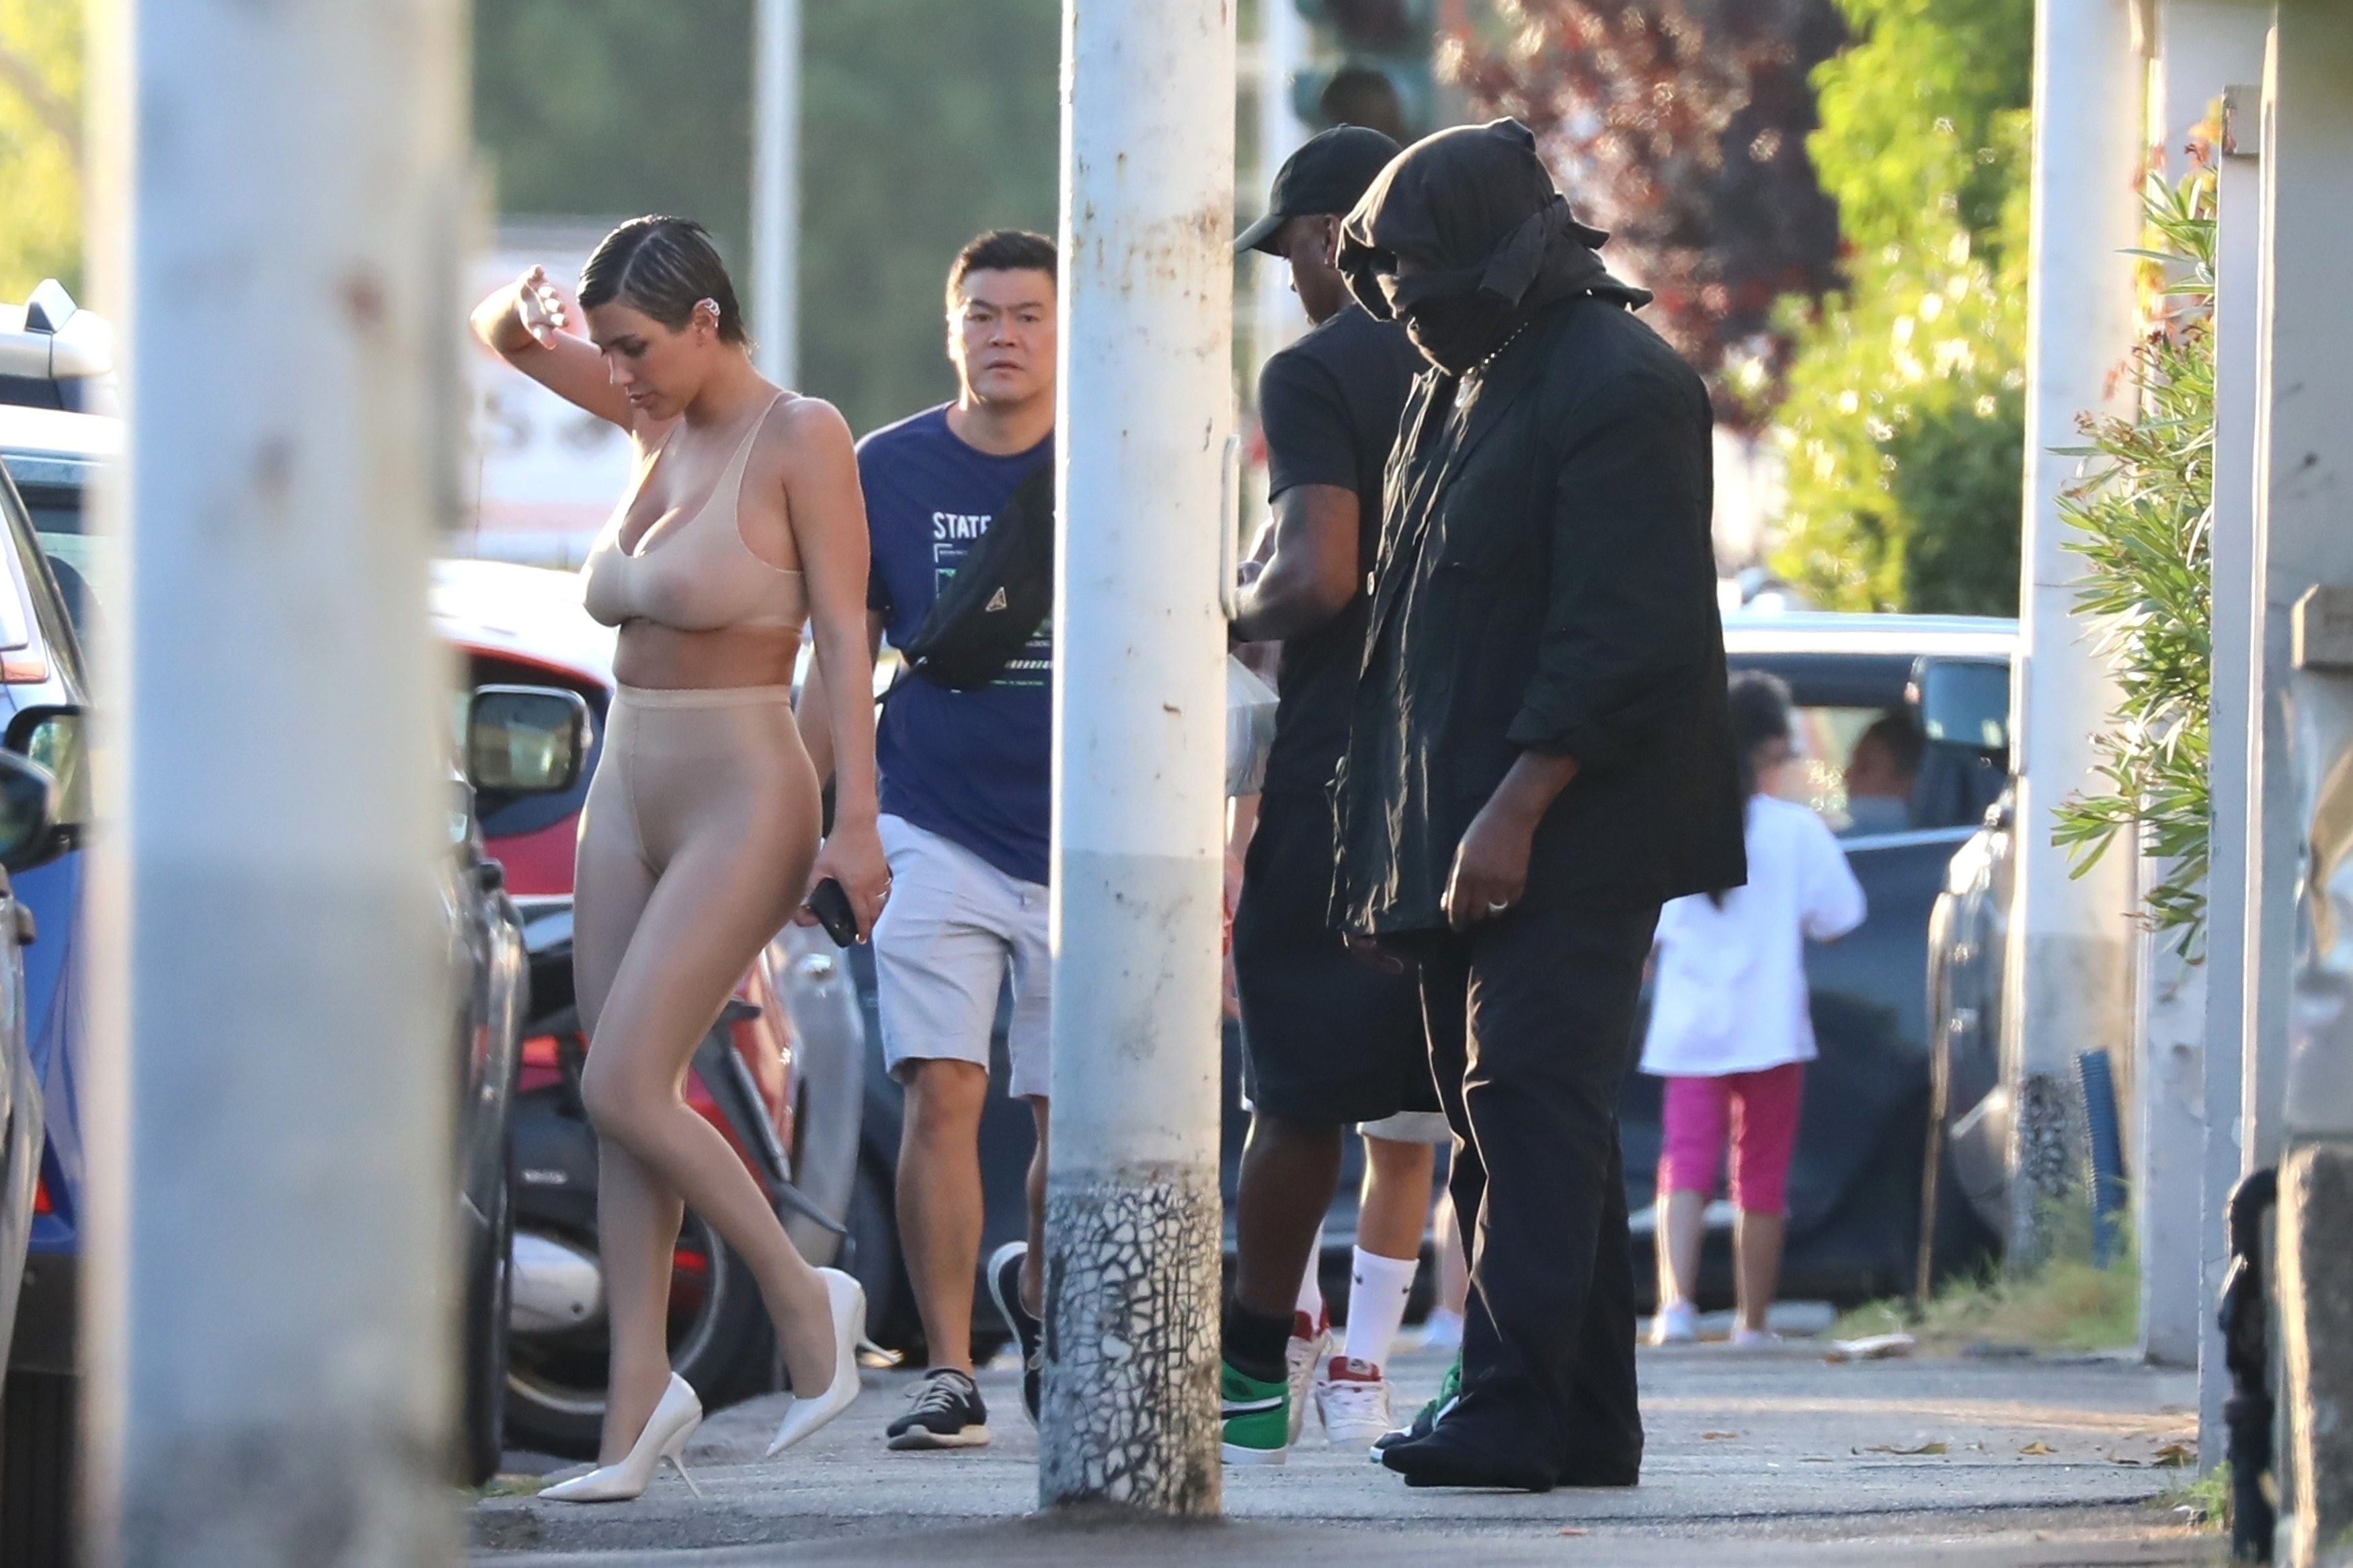 charmaine barnett add nearly naked in public photo